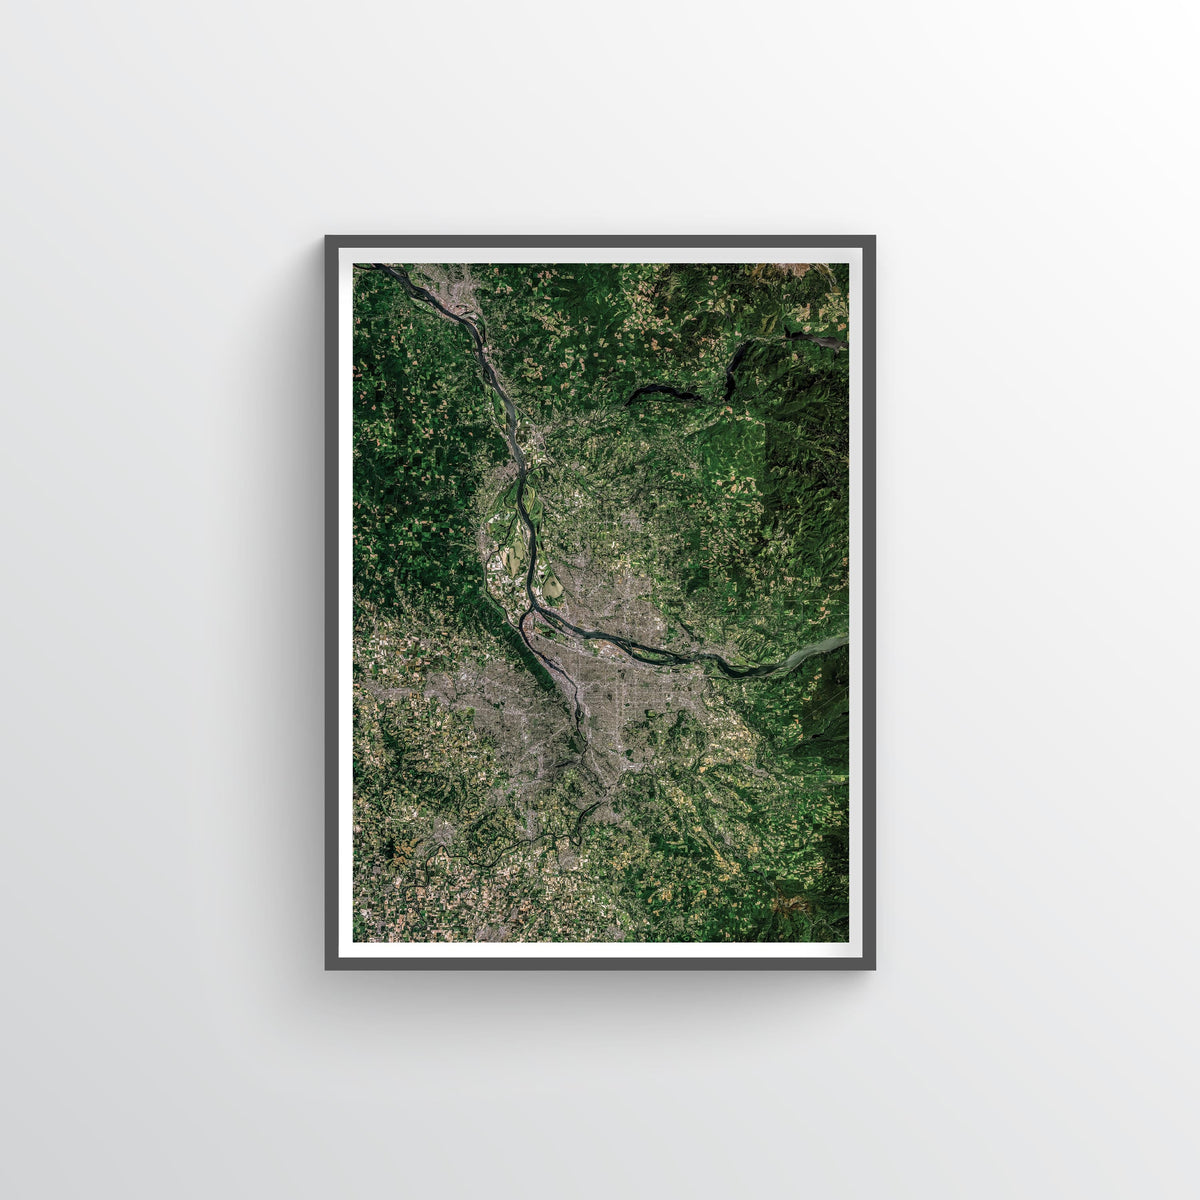 Portland Earth Photography - Art Print